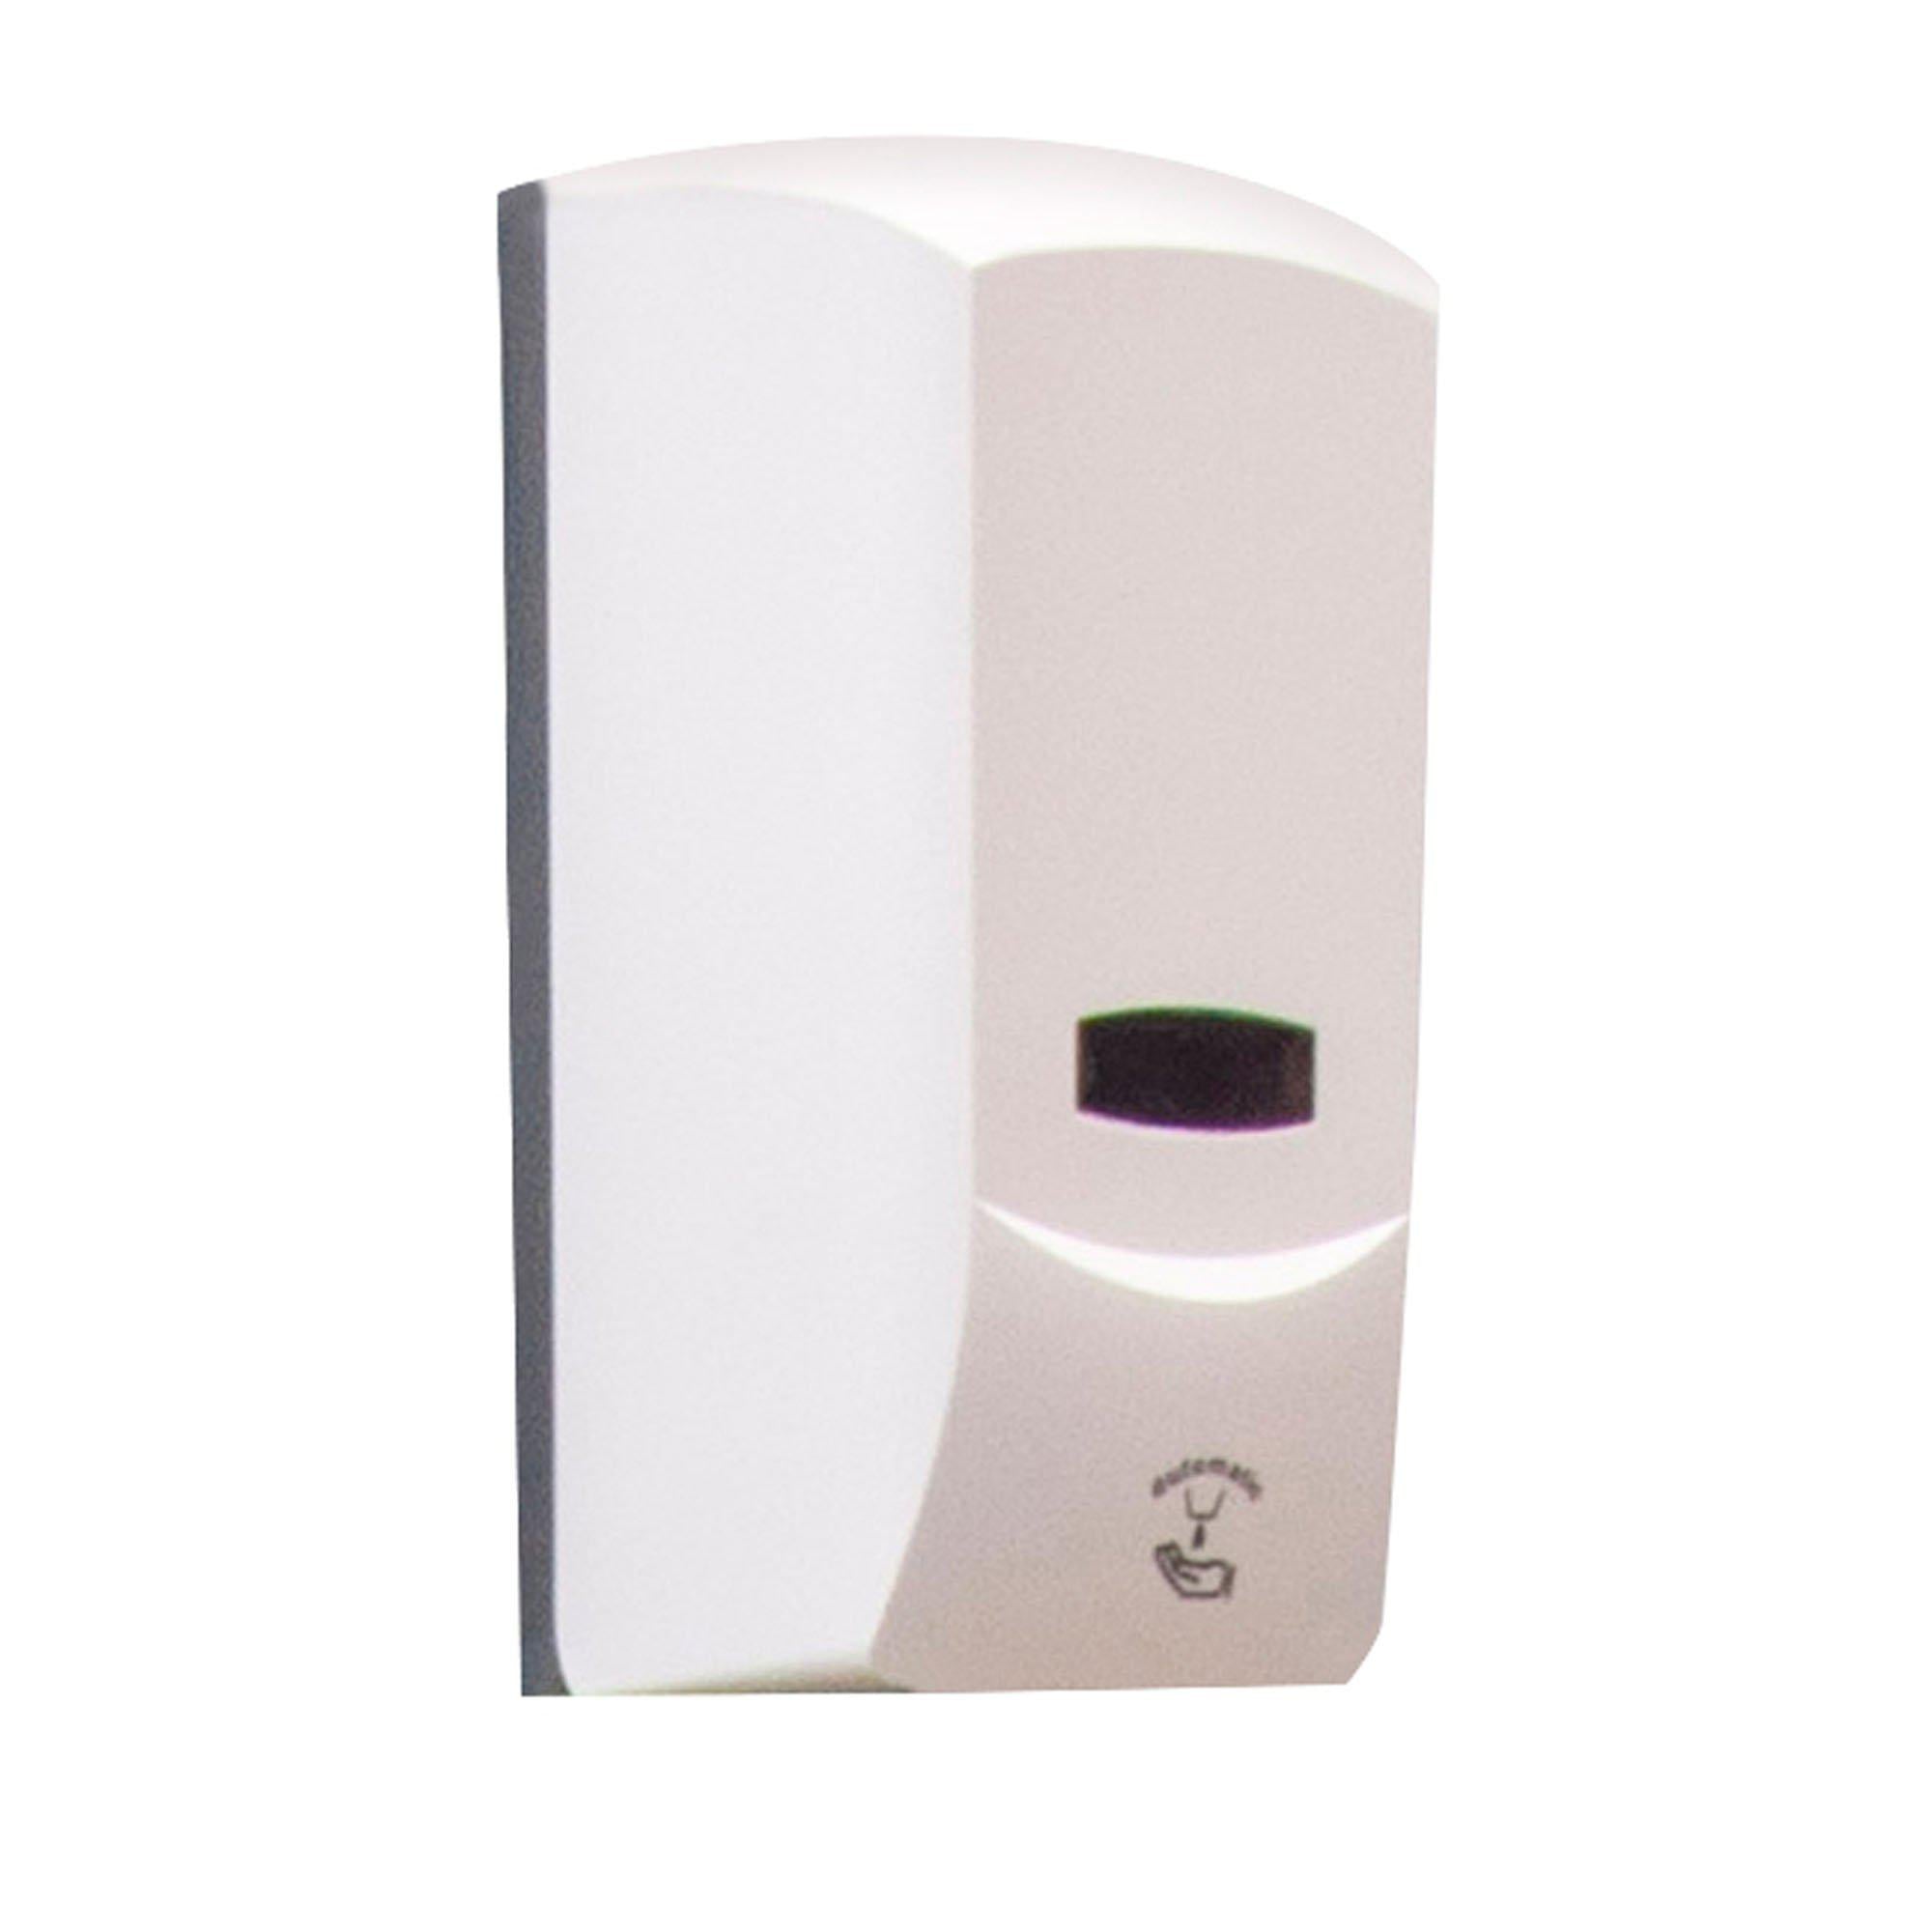 Touchless Hand Sanitizer Gel Dispenser (Sanitizer Not Included)